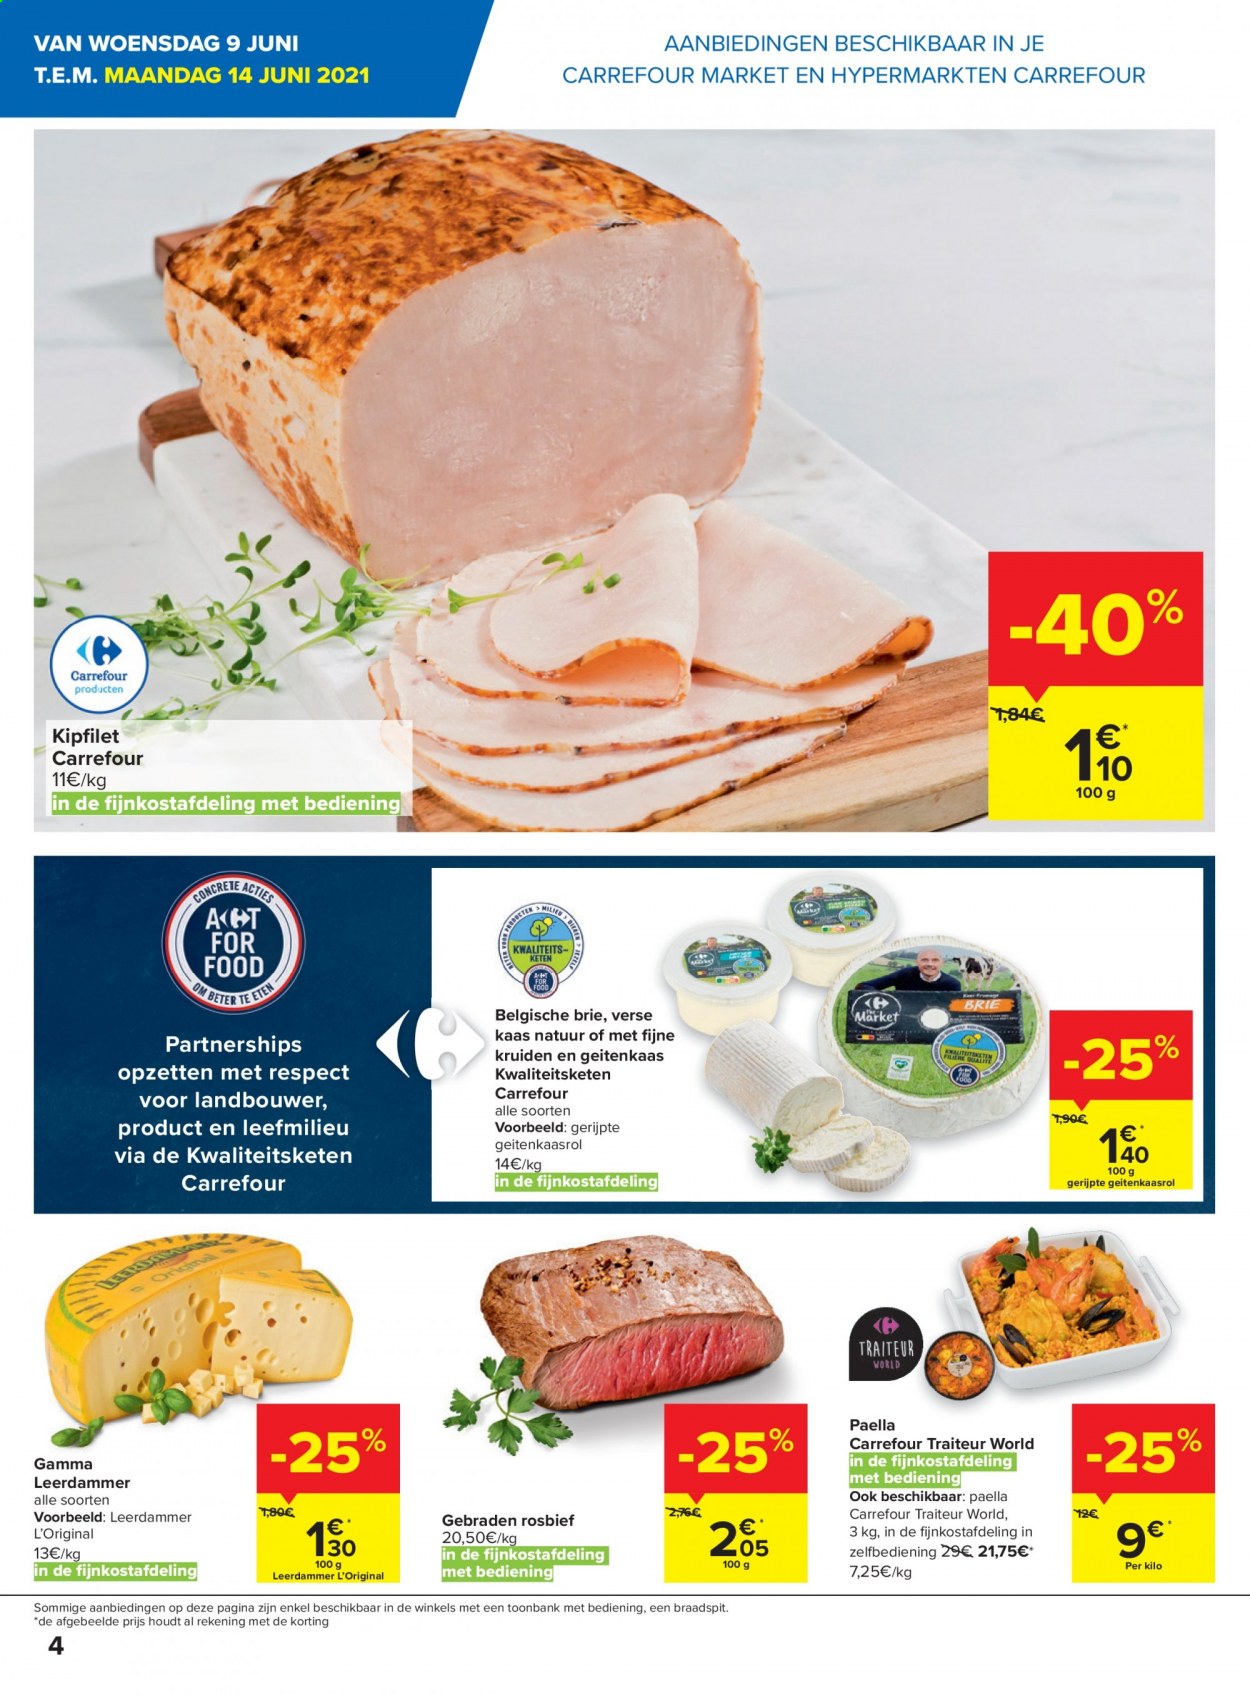 thumbnail - Carrefour-aanbieding - 09/06/2021 - 21/06/2021 -  producten in de aanbieding - kaas, kipfilet, Leerdammer, rosbief, Gamma, Brie. Pagina 4.